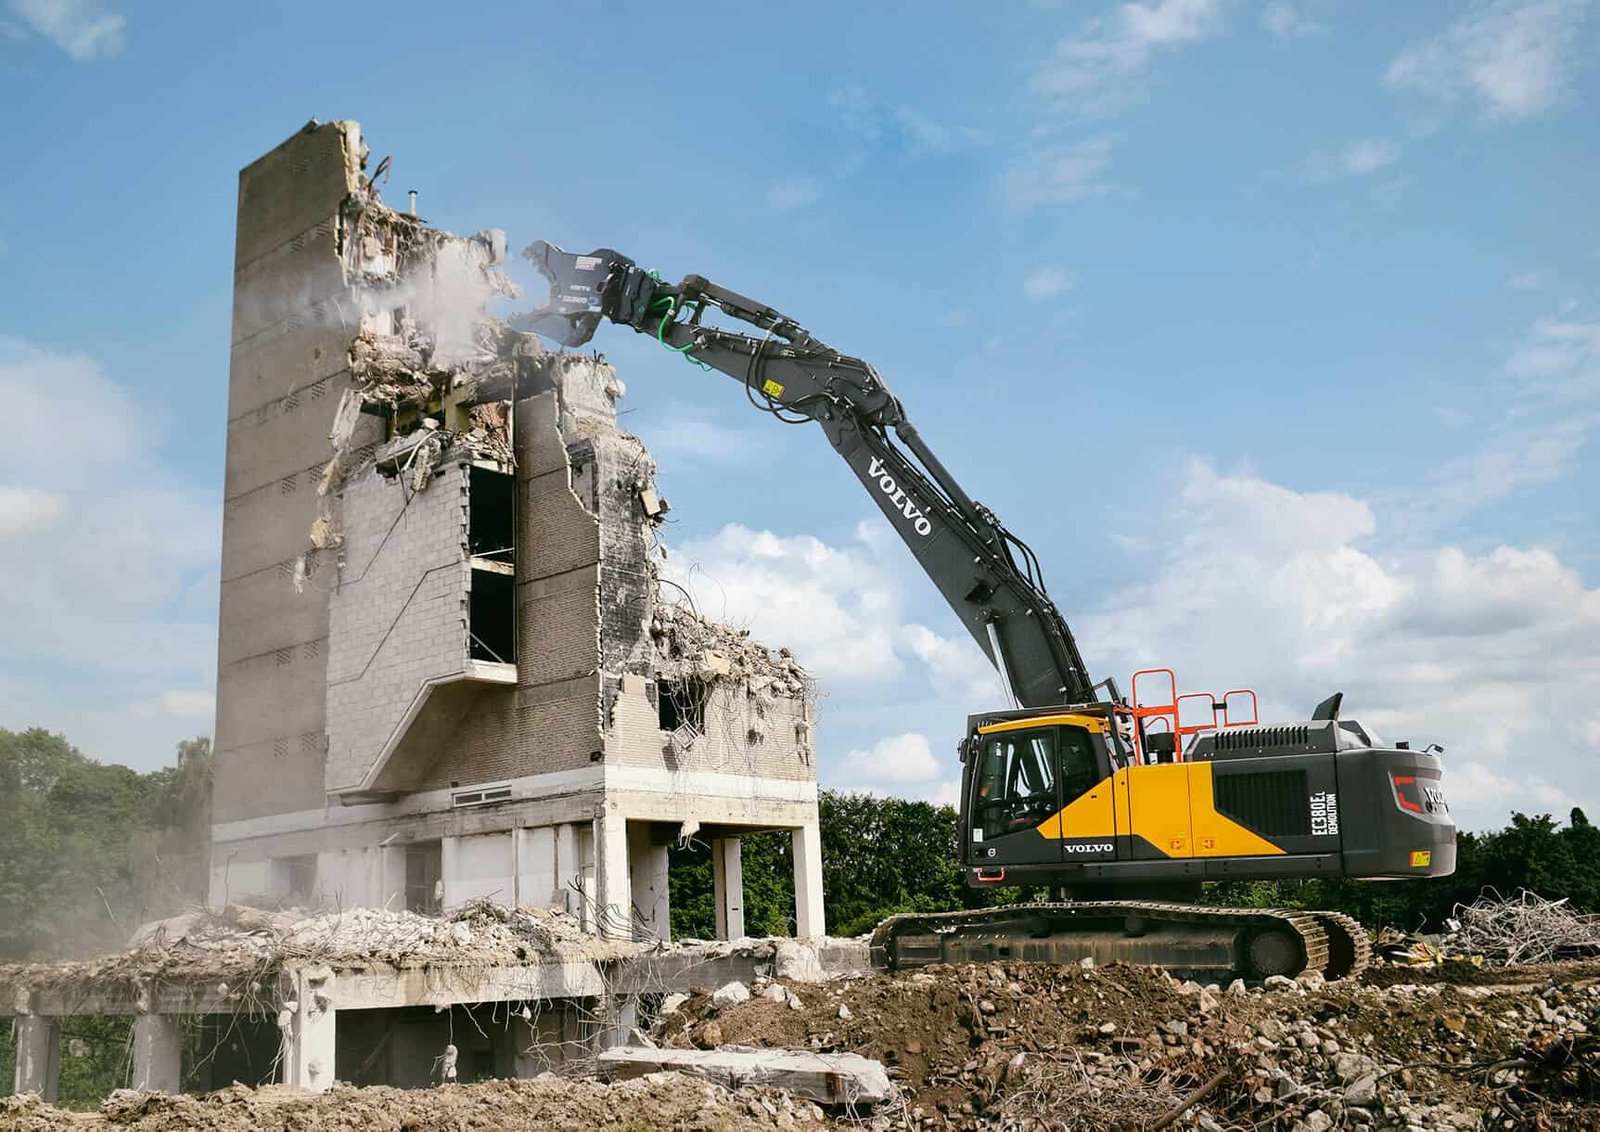 Onsite photograph of crawler excavators during demolition